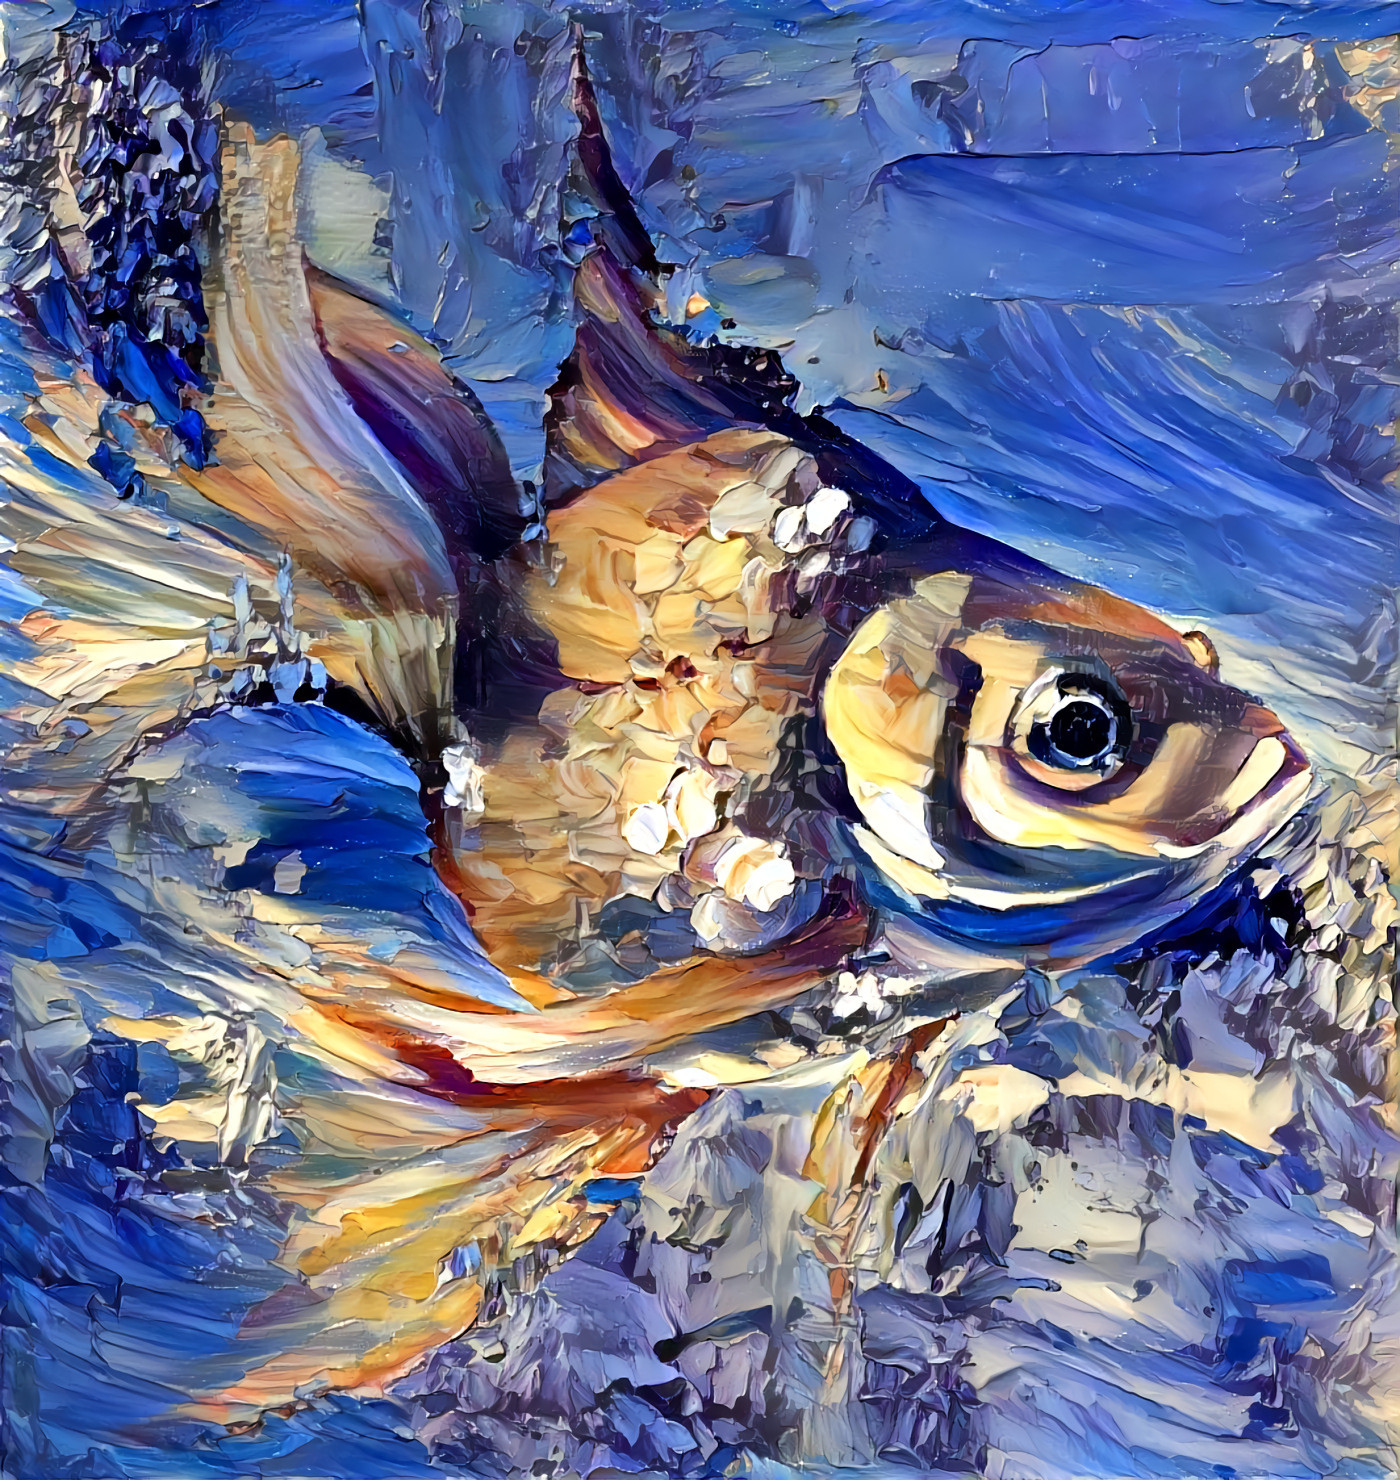 Goldfish transformed